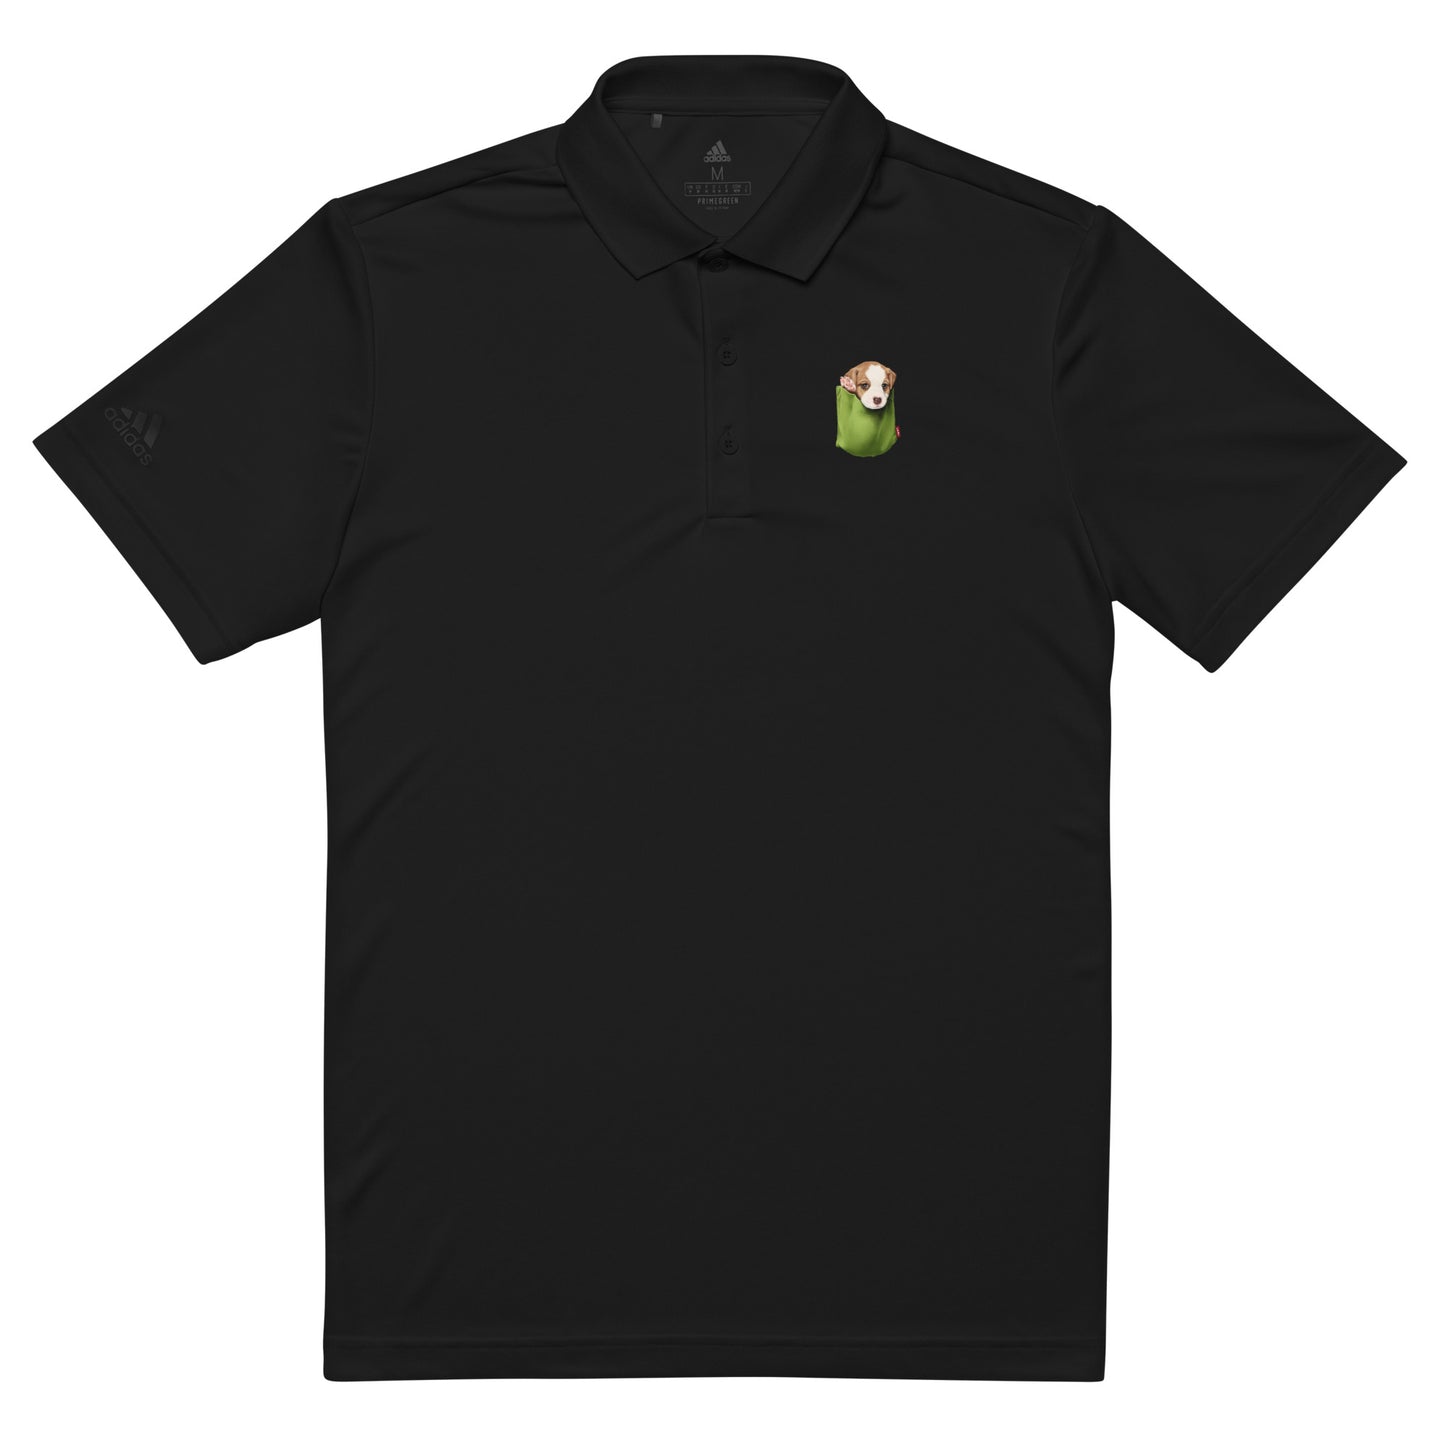 Jack Russell Terrier adidas Premium Polo Shirt